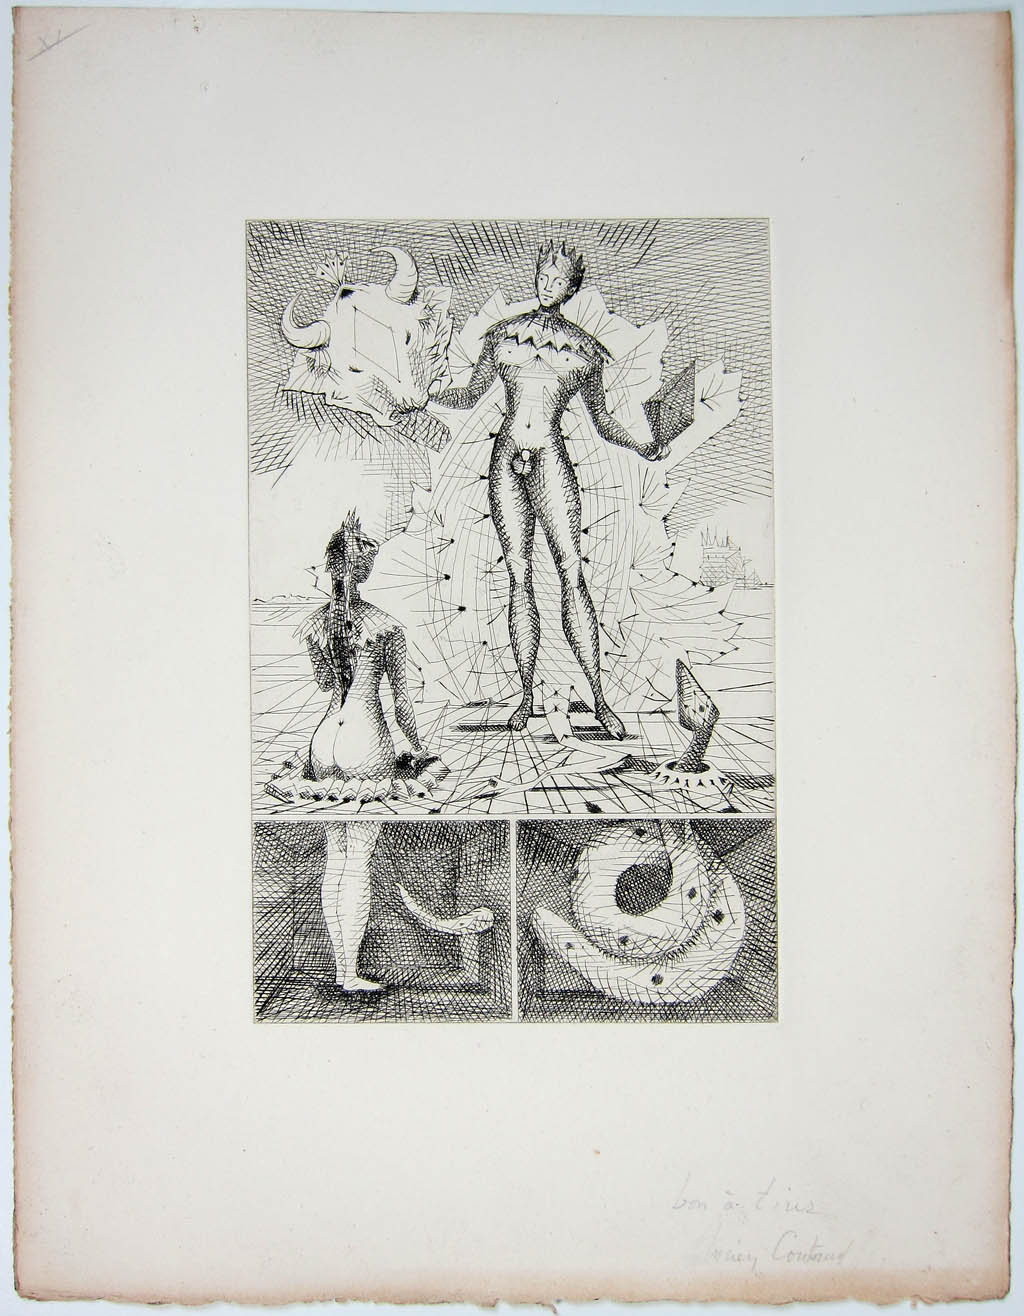 Lucien Coutaud - Le Taureau Blanc - plate XI (bon a tirer) - 1956 etching